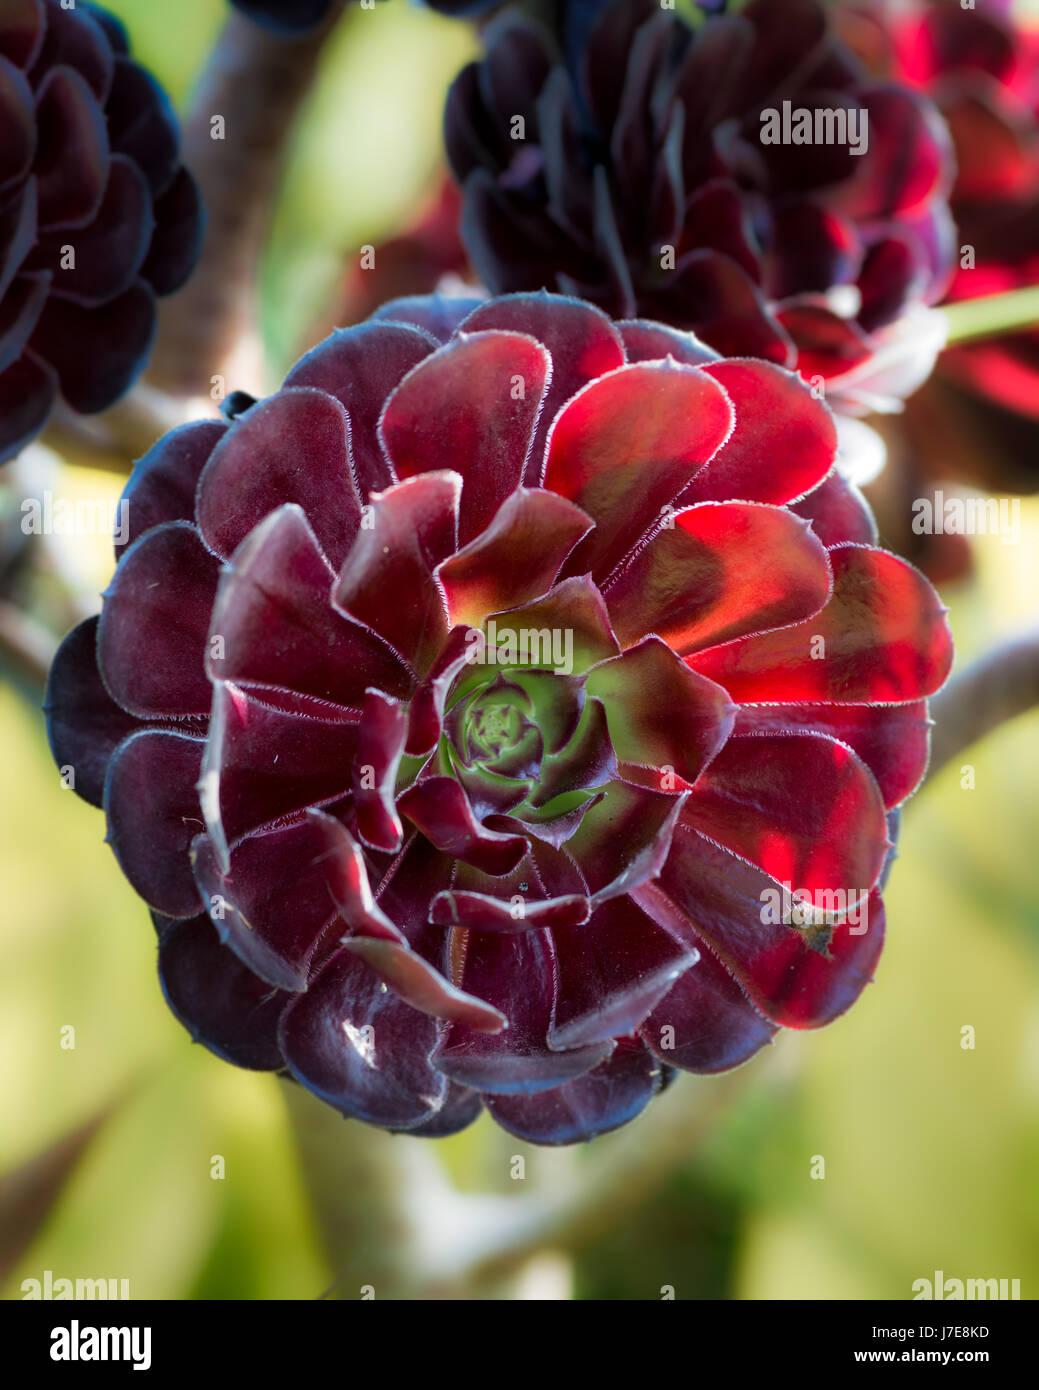 Rosa negra suculenta fotografías e imágenes de alta resolución - Alamy